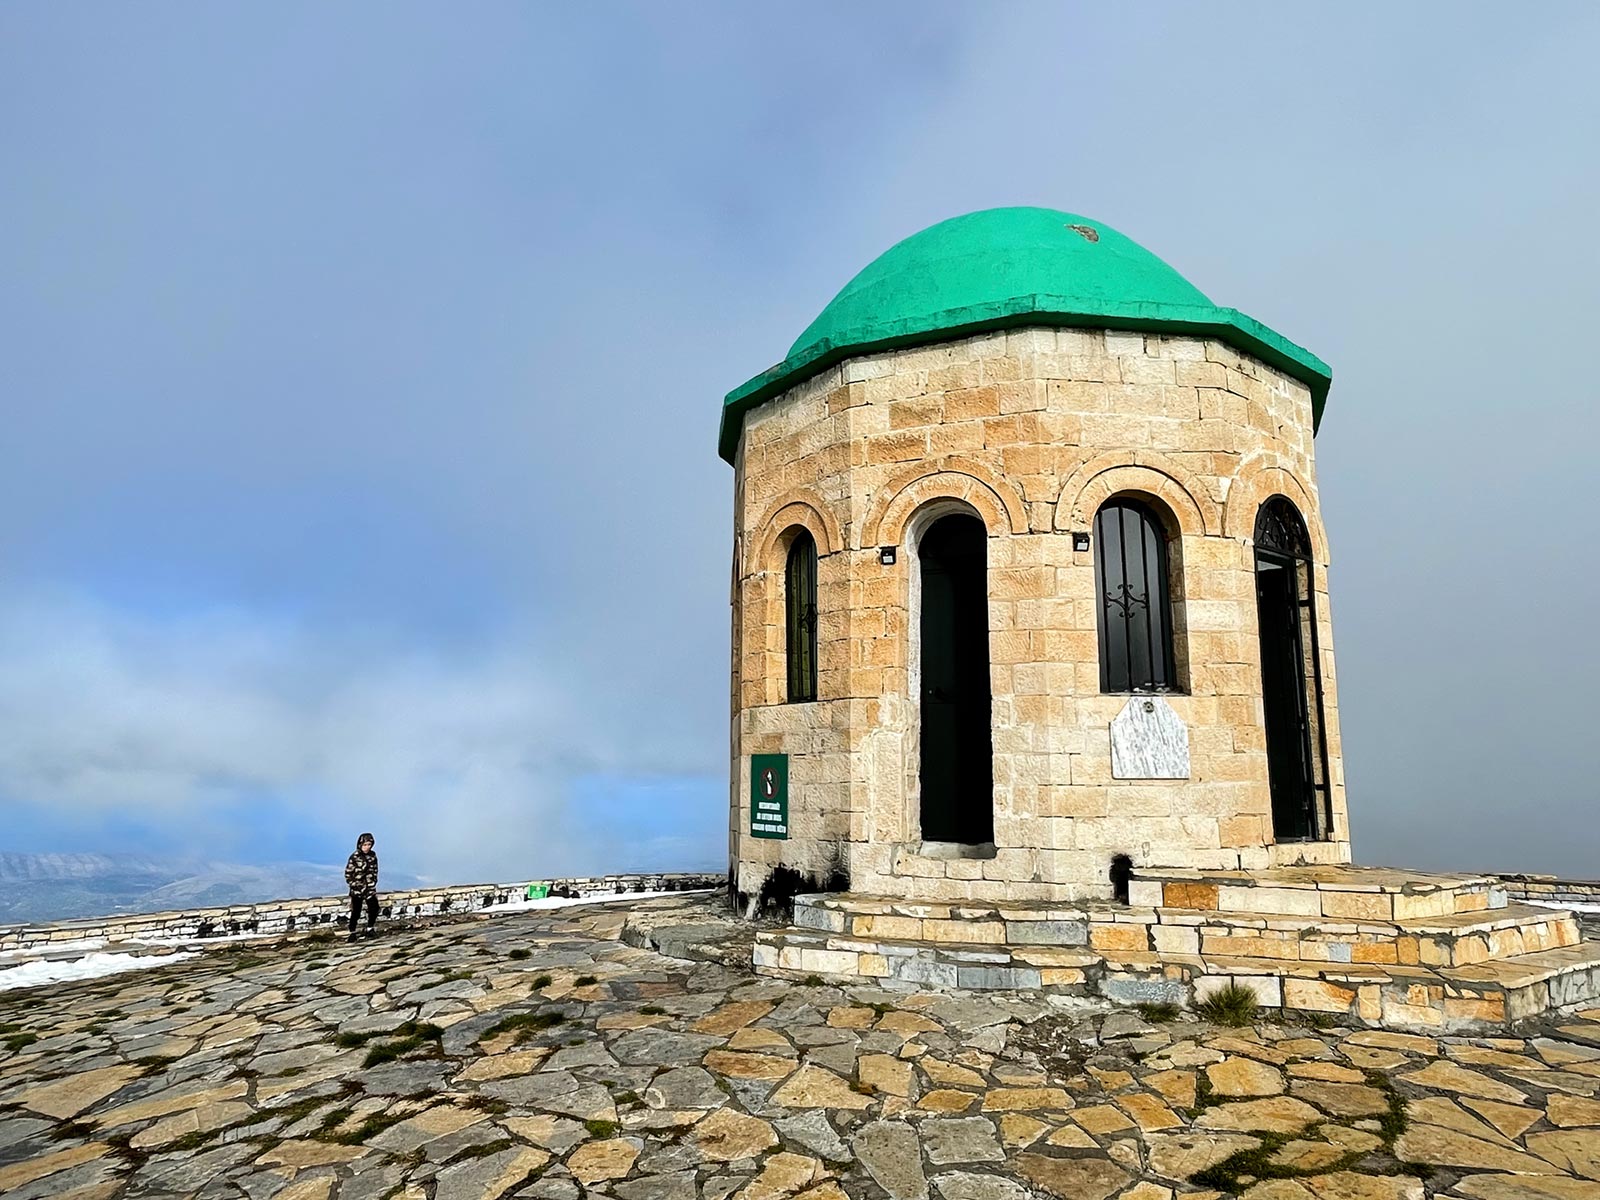 Abaz Aliun mausoleumi, Tomorr-vuori